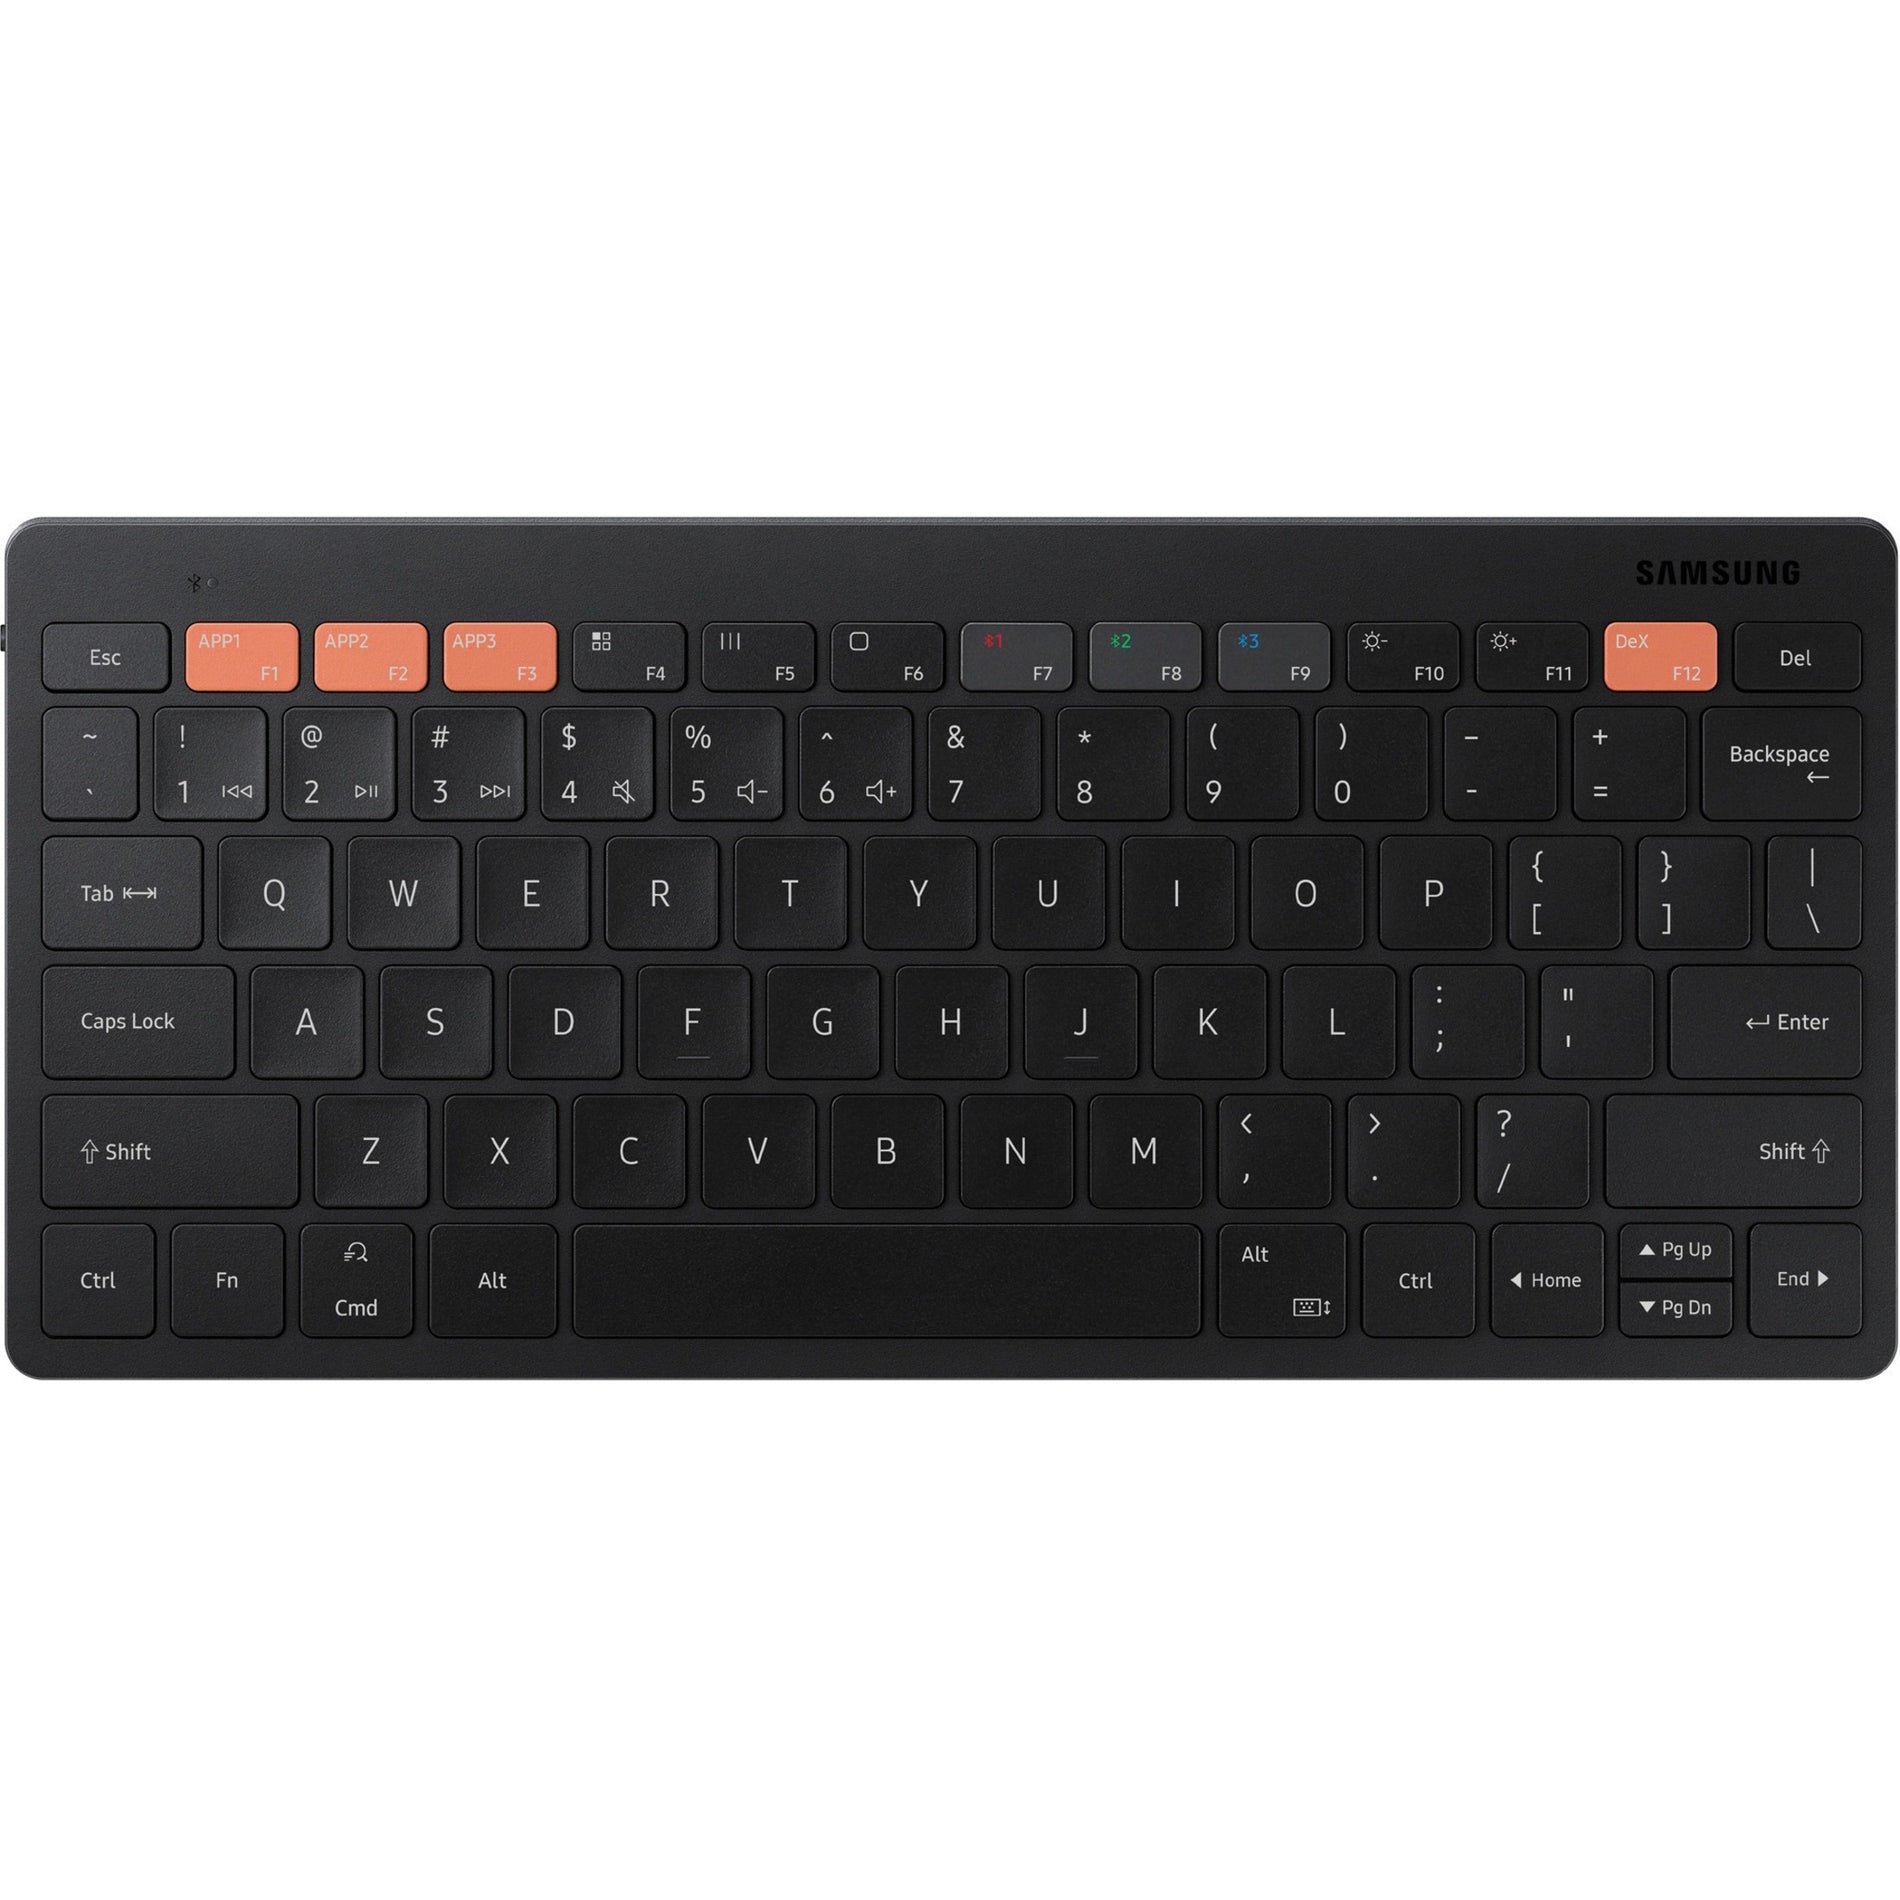 Samsung EJ-B3400UBEGUS Smart Keyboard Trio 500, Black - Slim Bluetooth Wireless Keyboard for Tablet and Smartphone